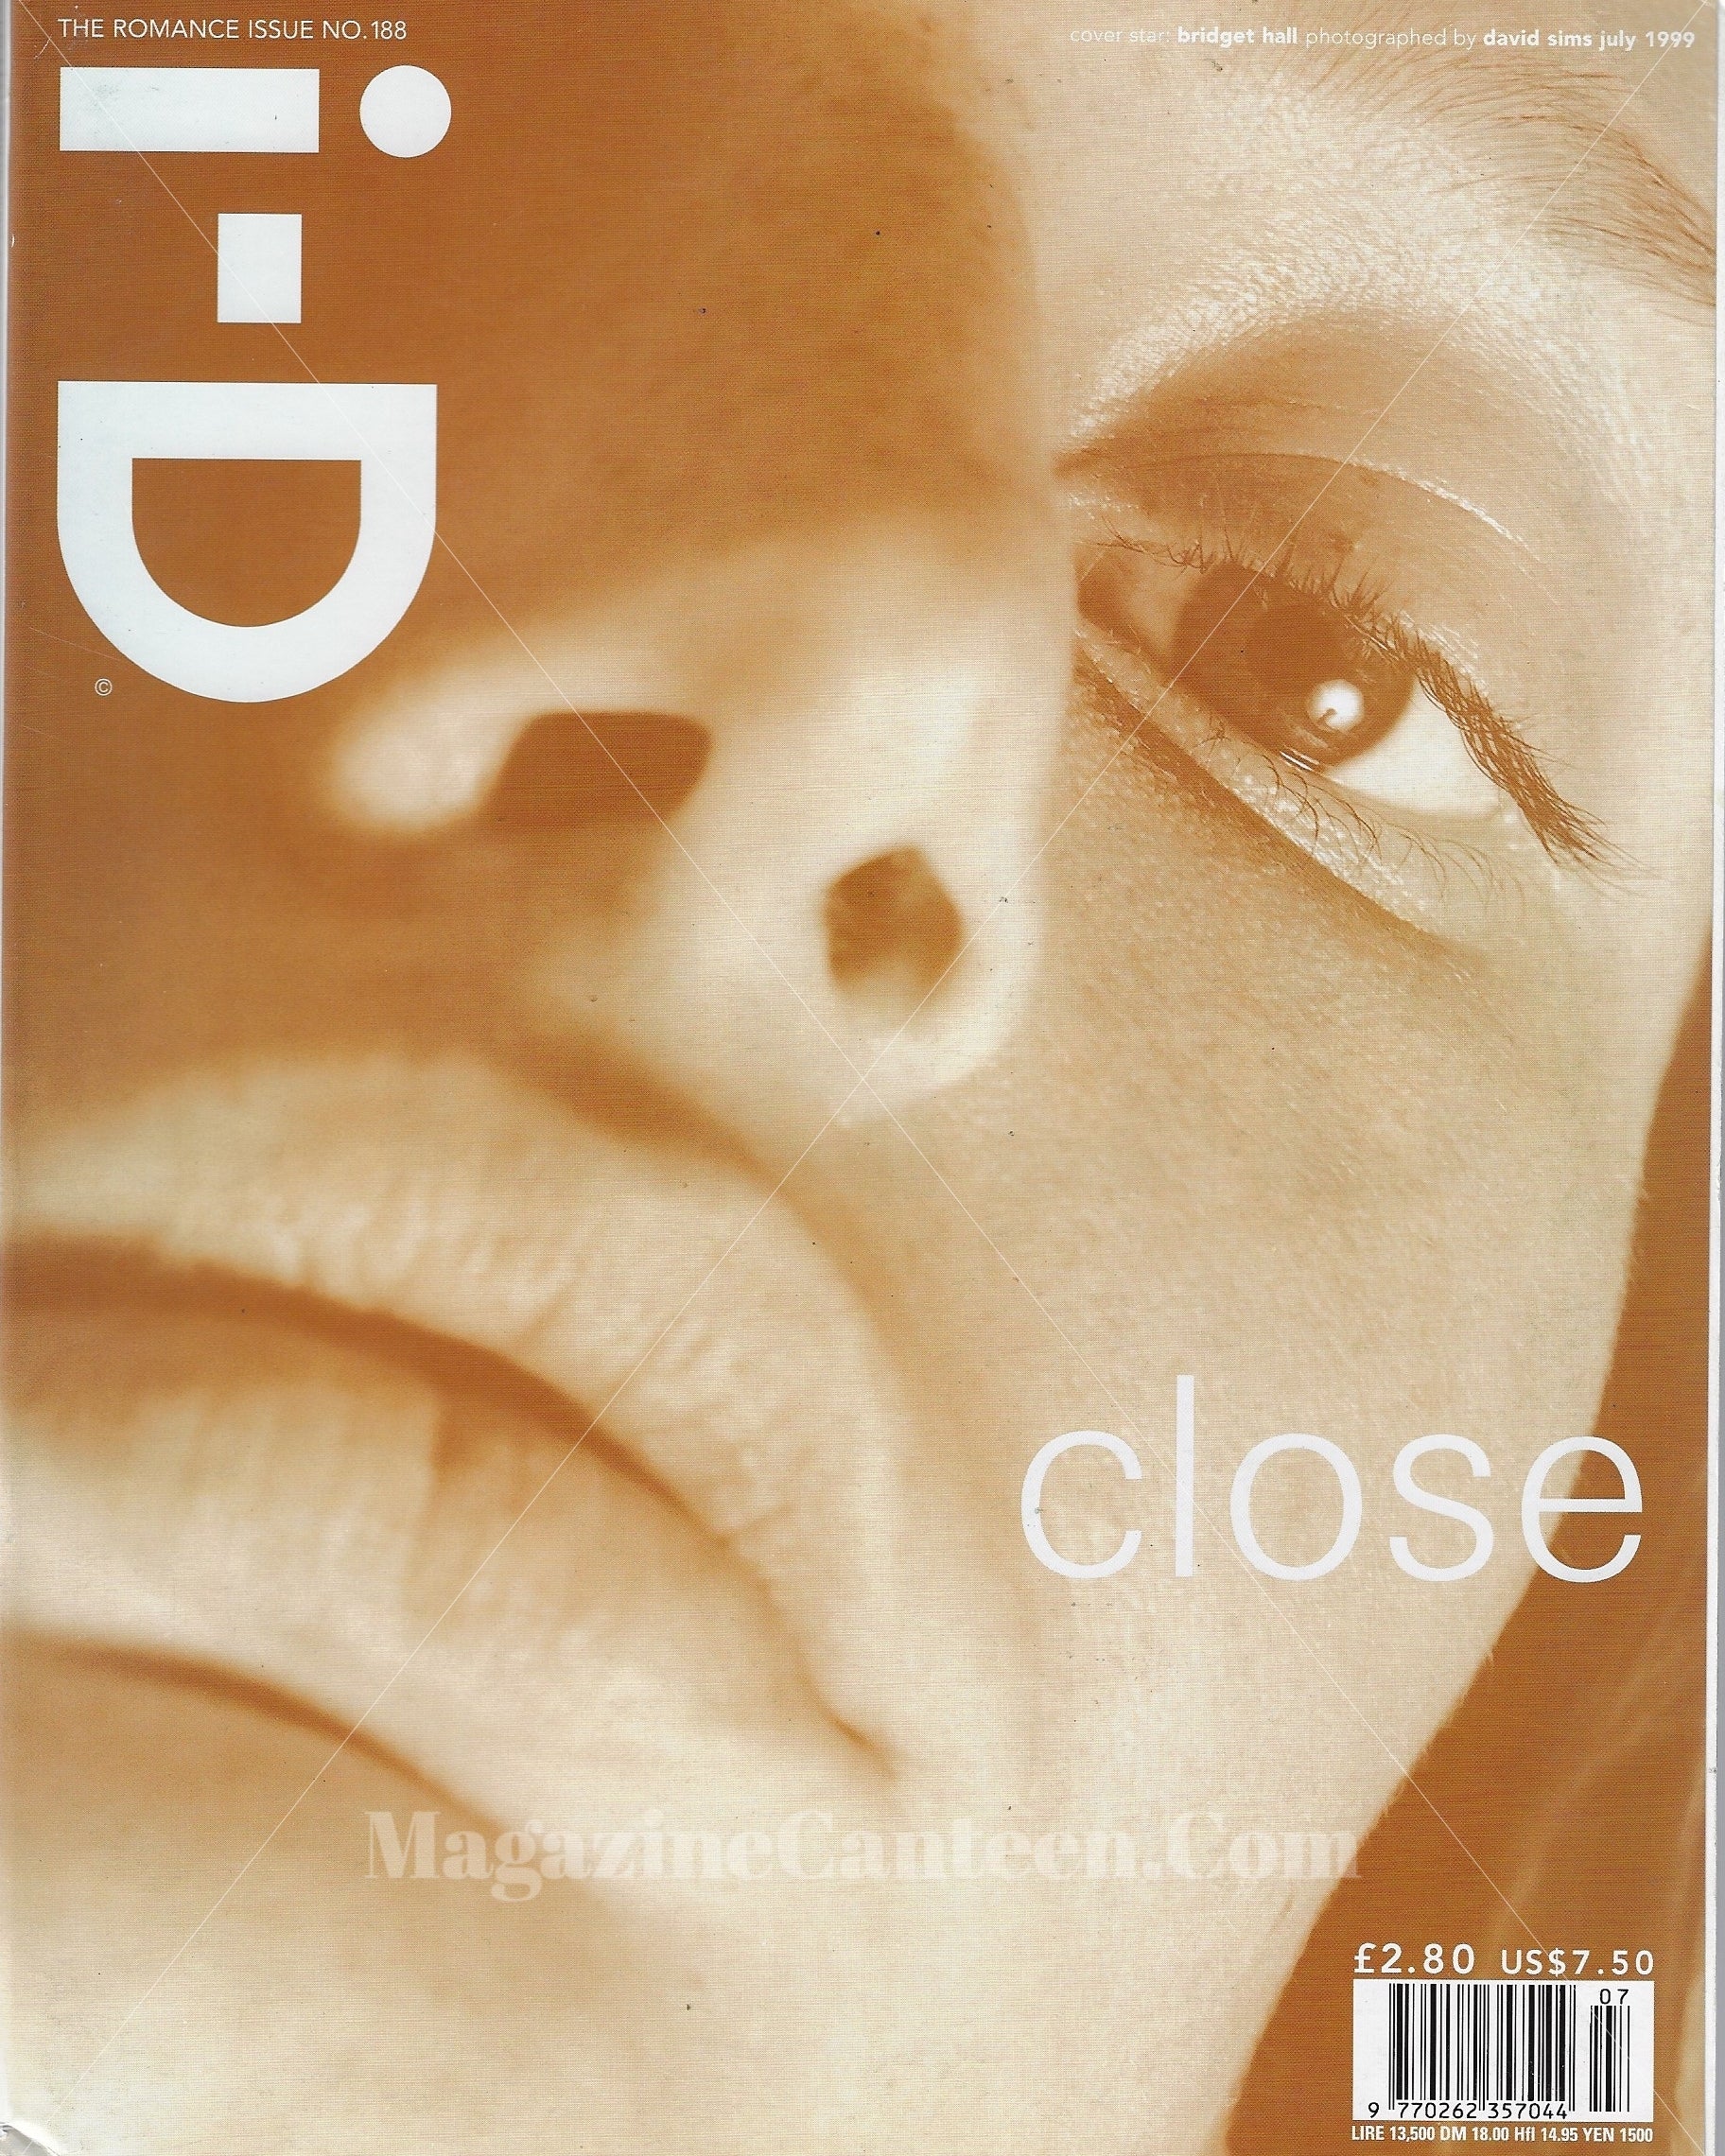 I-D Magazine 188 - Bridget Hall 1999